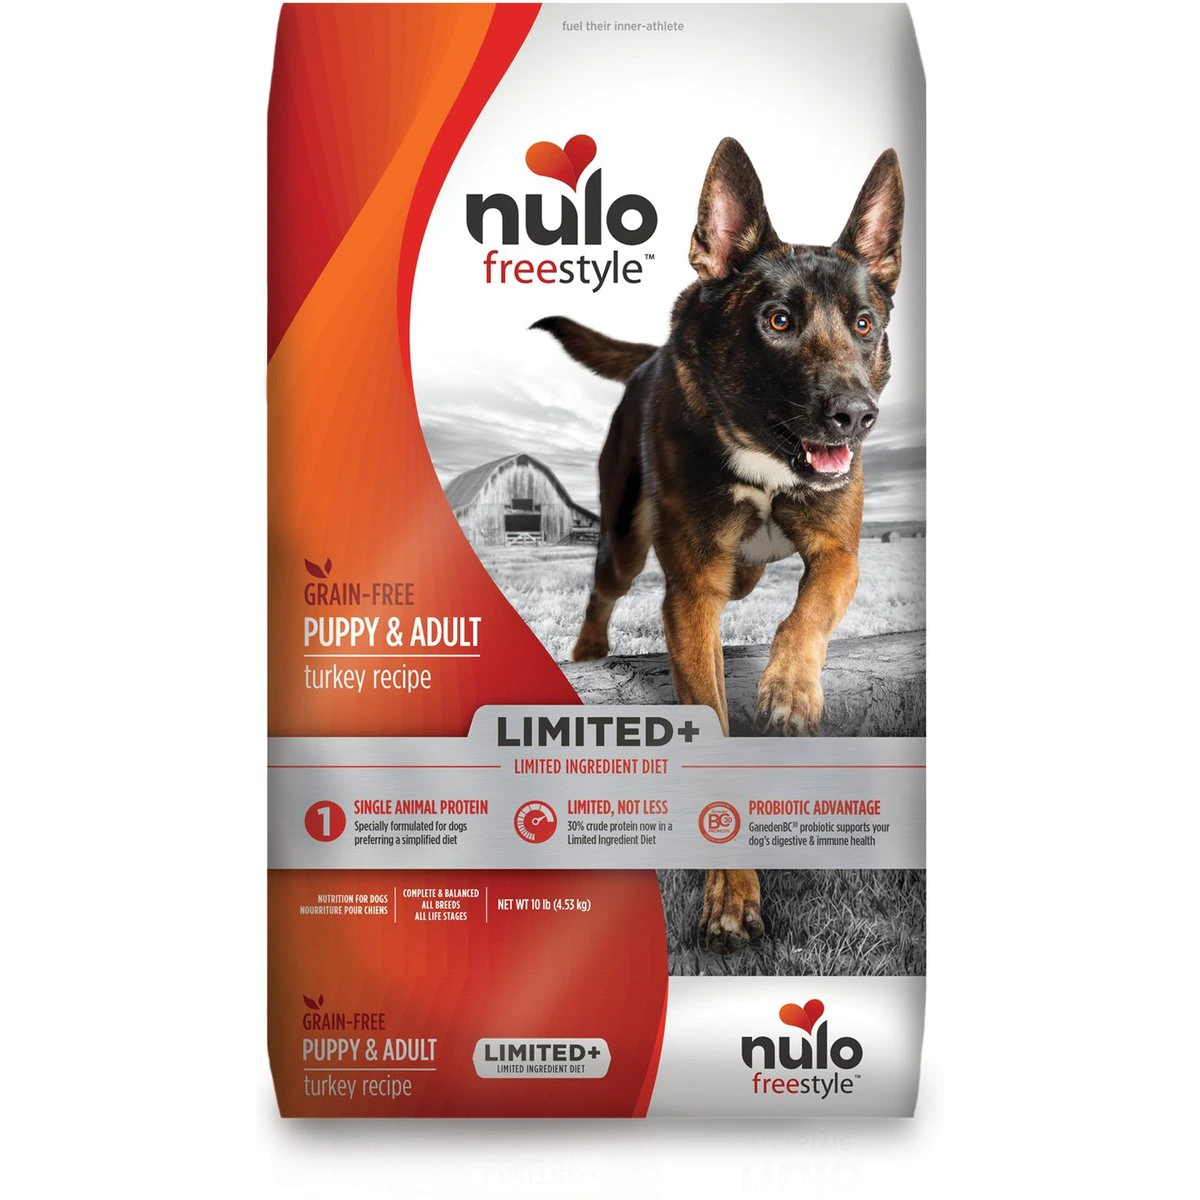 Nulo Freestyle Limited+ Turkey Dry Dog Food